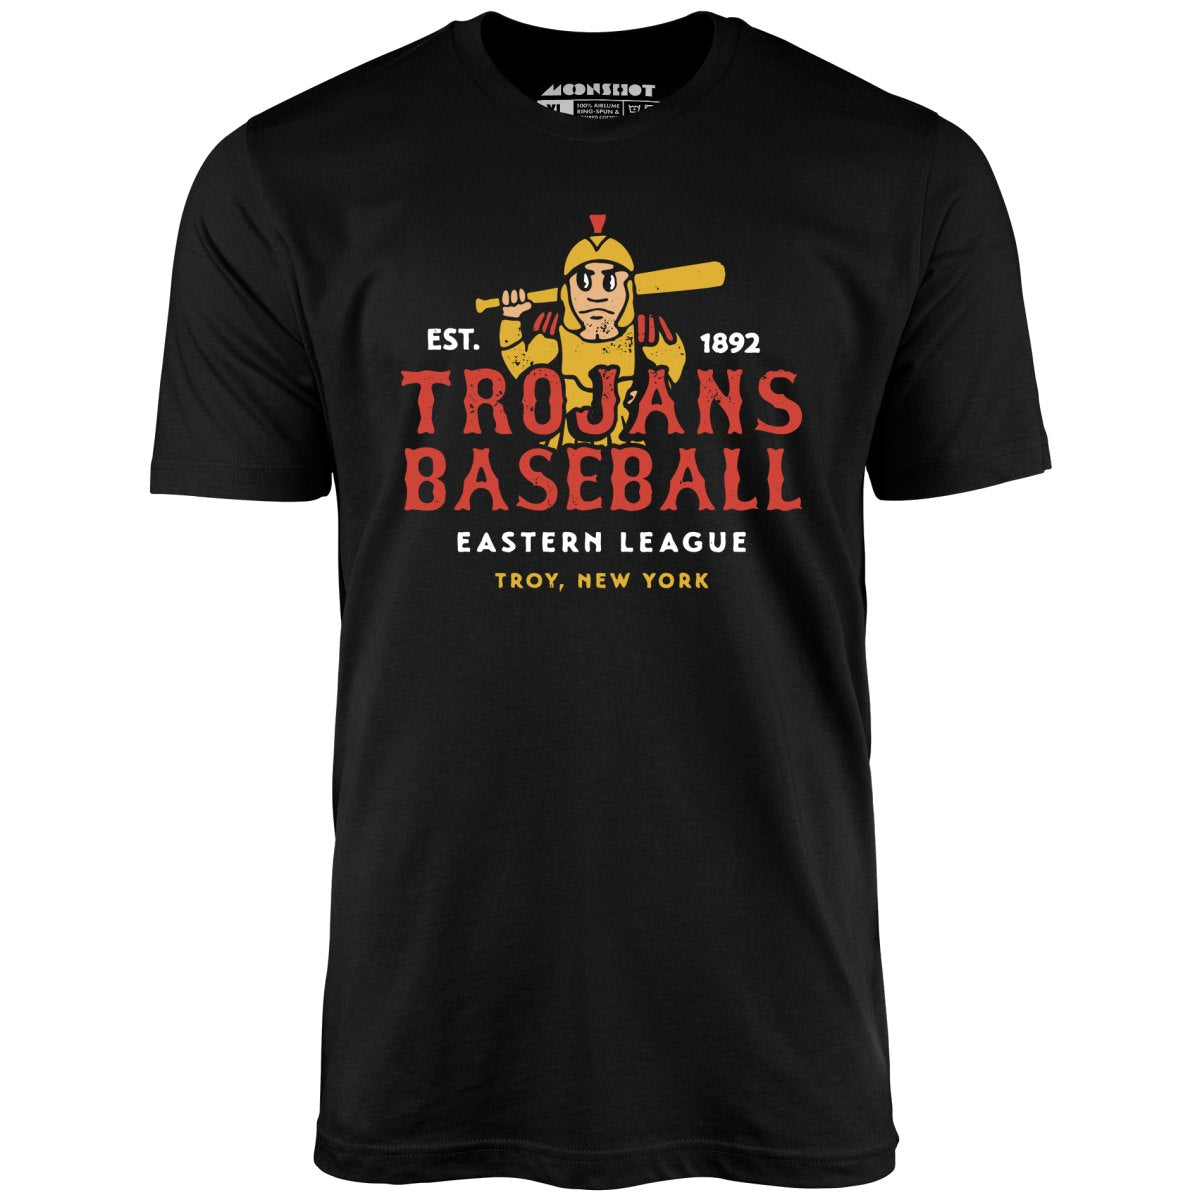 Troy Trojans - New York - Vintage Defunct Baseball Teams - Unisex T-Shirt